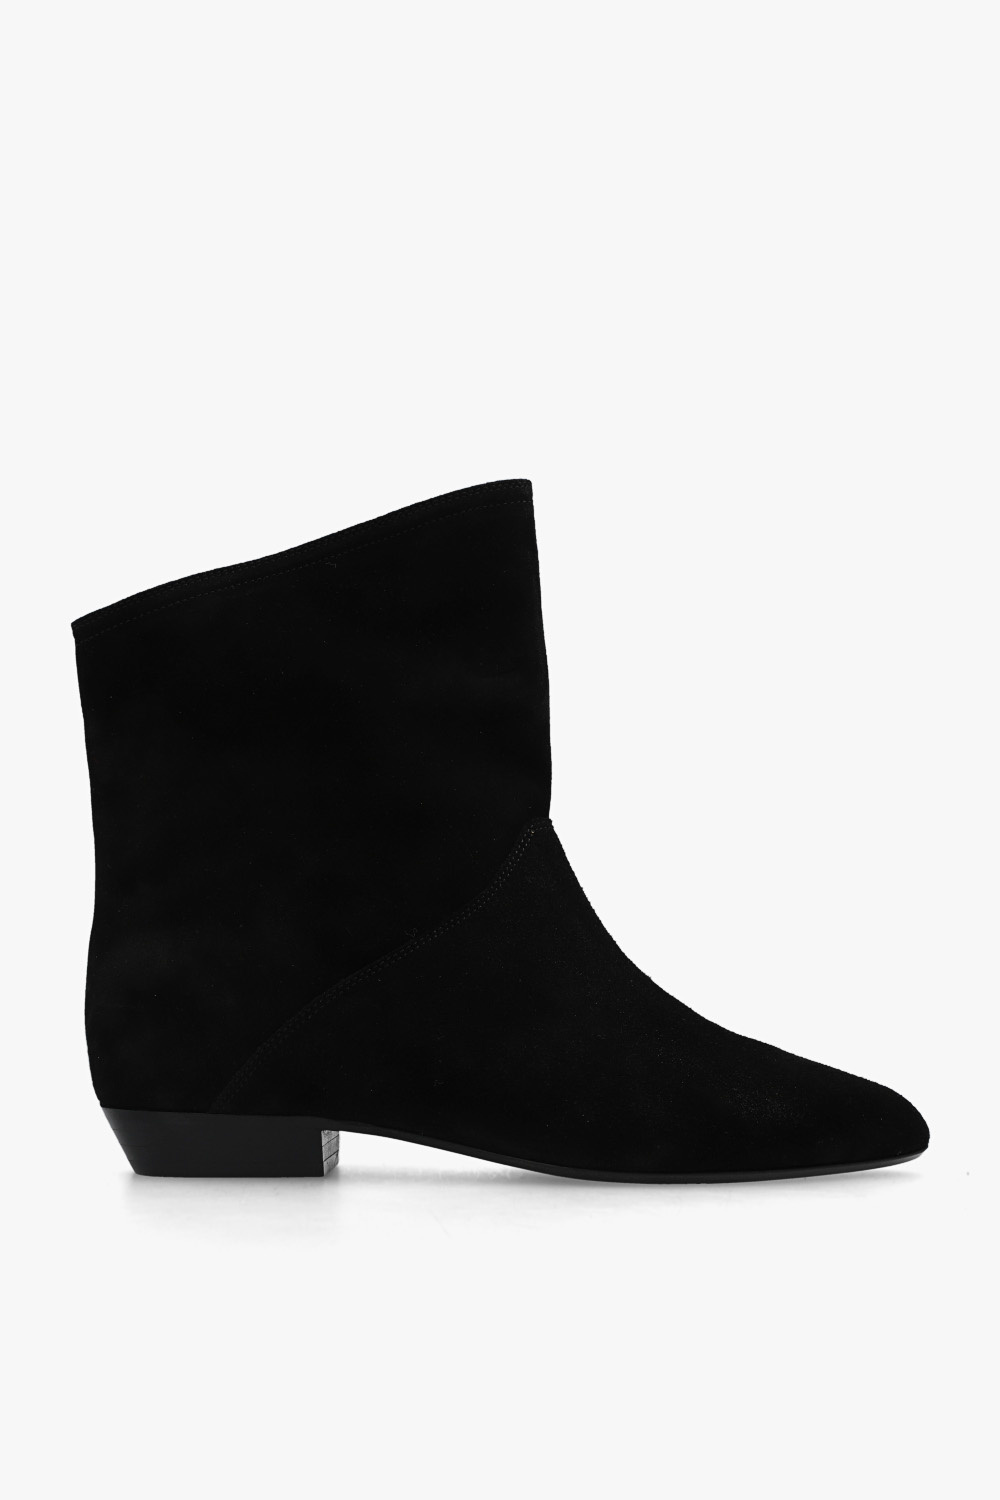 Isabel Marant ‘Solvan’ suede ankle boots